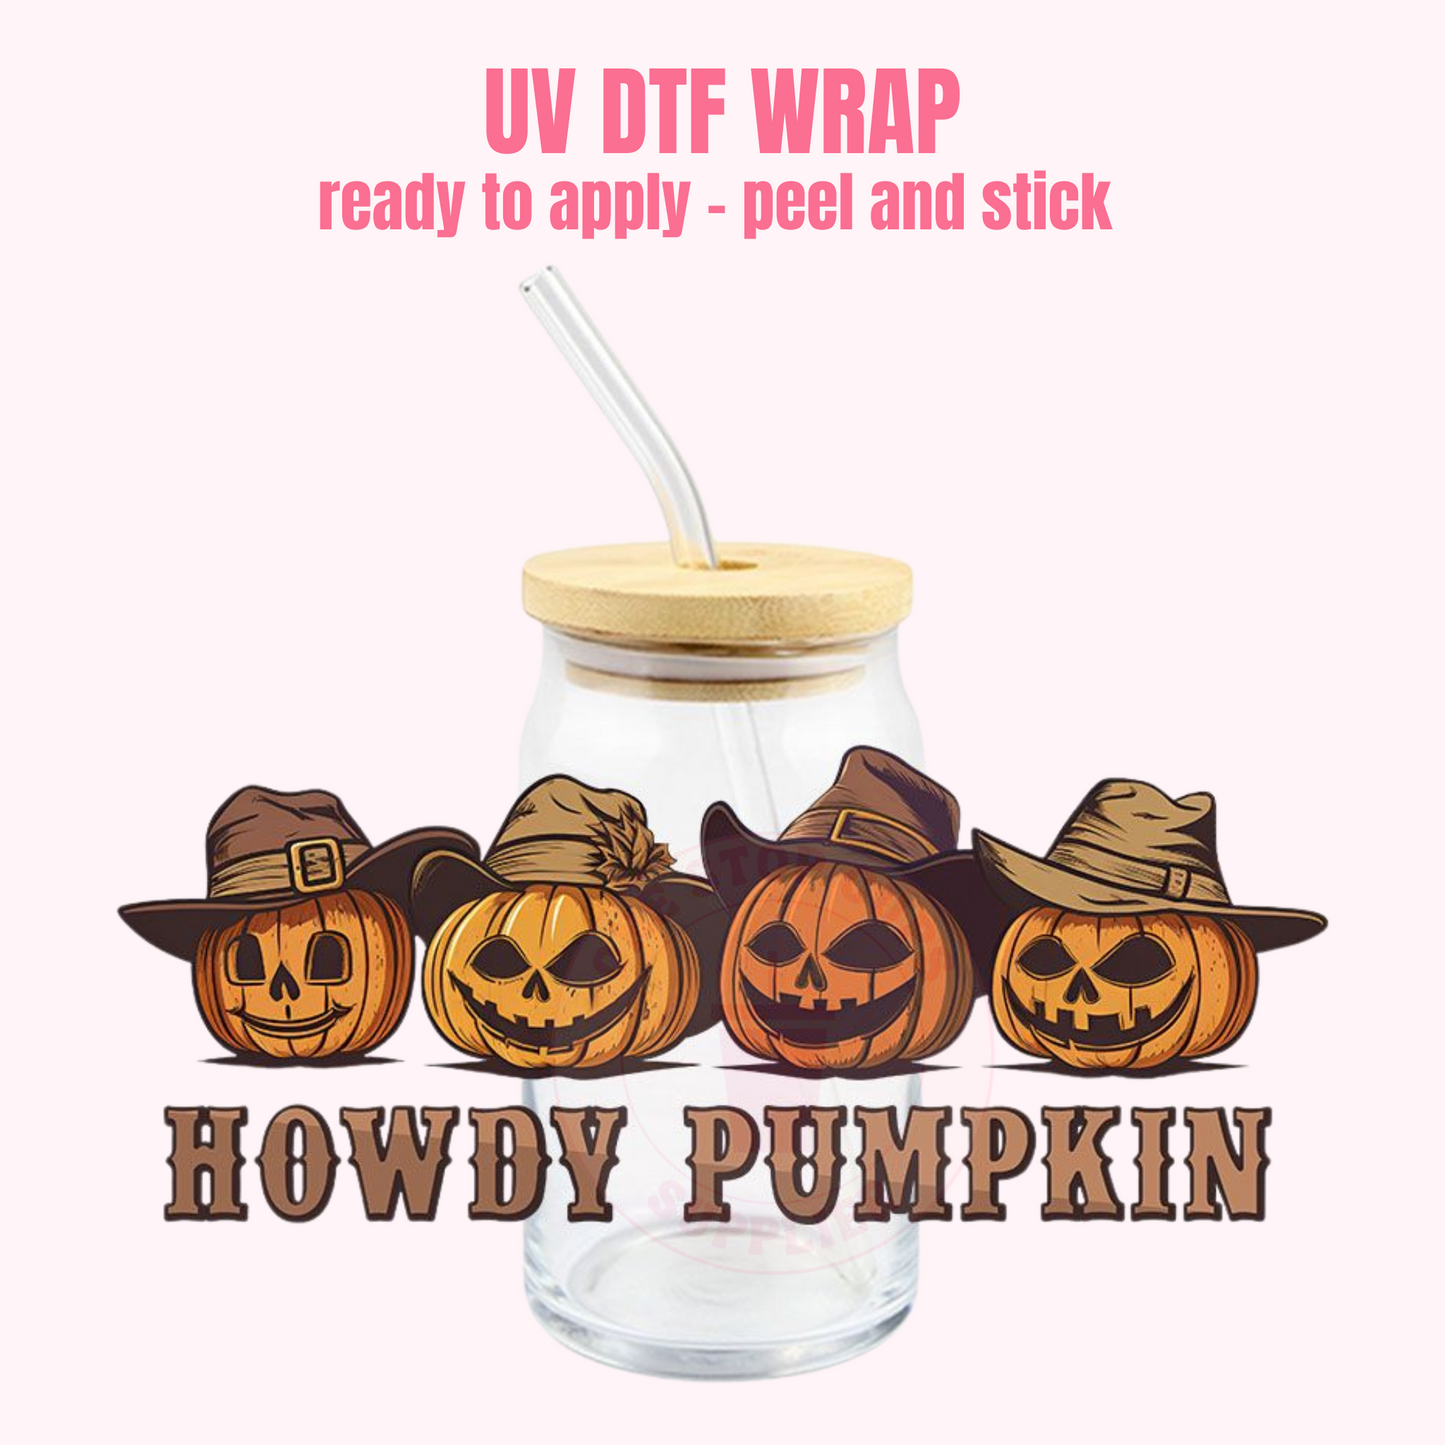 UV DTF CUP WRAP Howdy Pumpkin H12